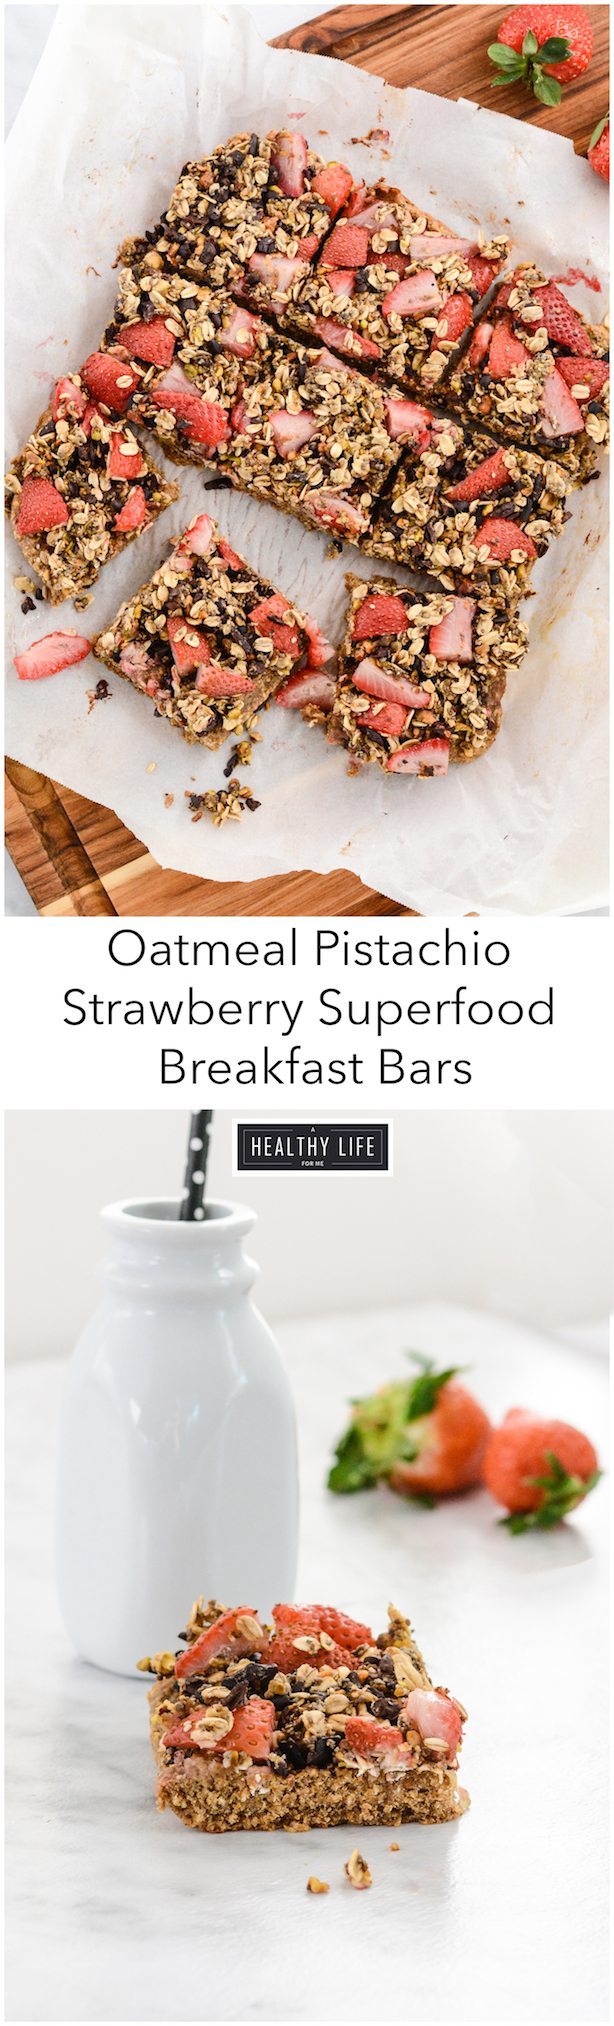 Oatmeal Pistachio Strawberry Superfood Breakfast Bars Recipe | ahealthylifeforme.com